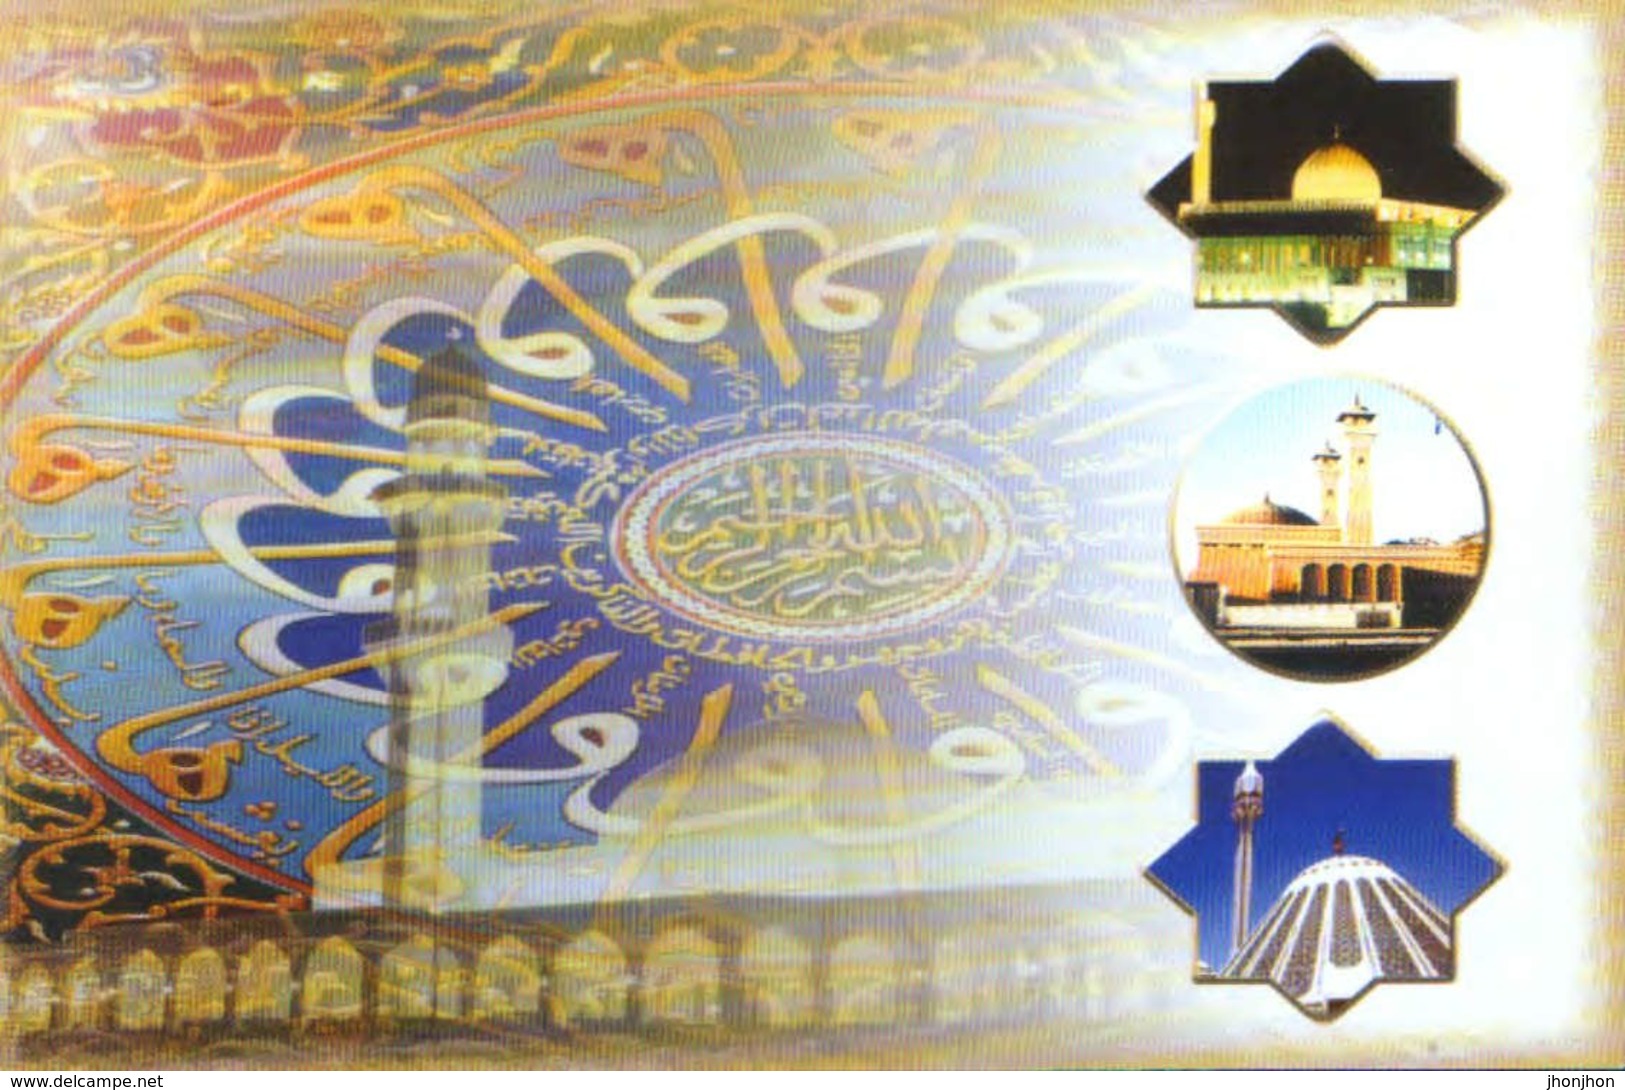 Kuwait - Postcard Unused - Kuwait City - Mosques - 2/scans - Kuwait